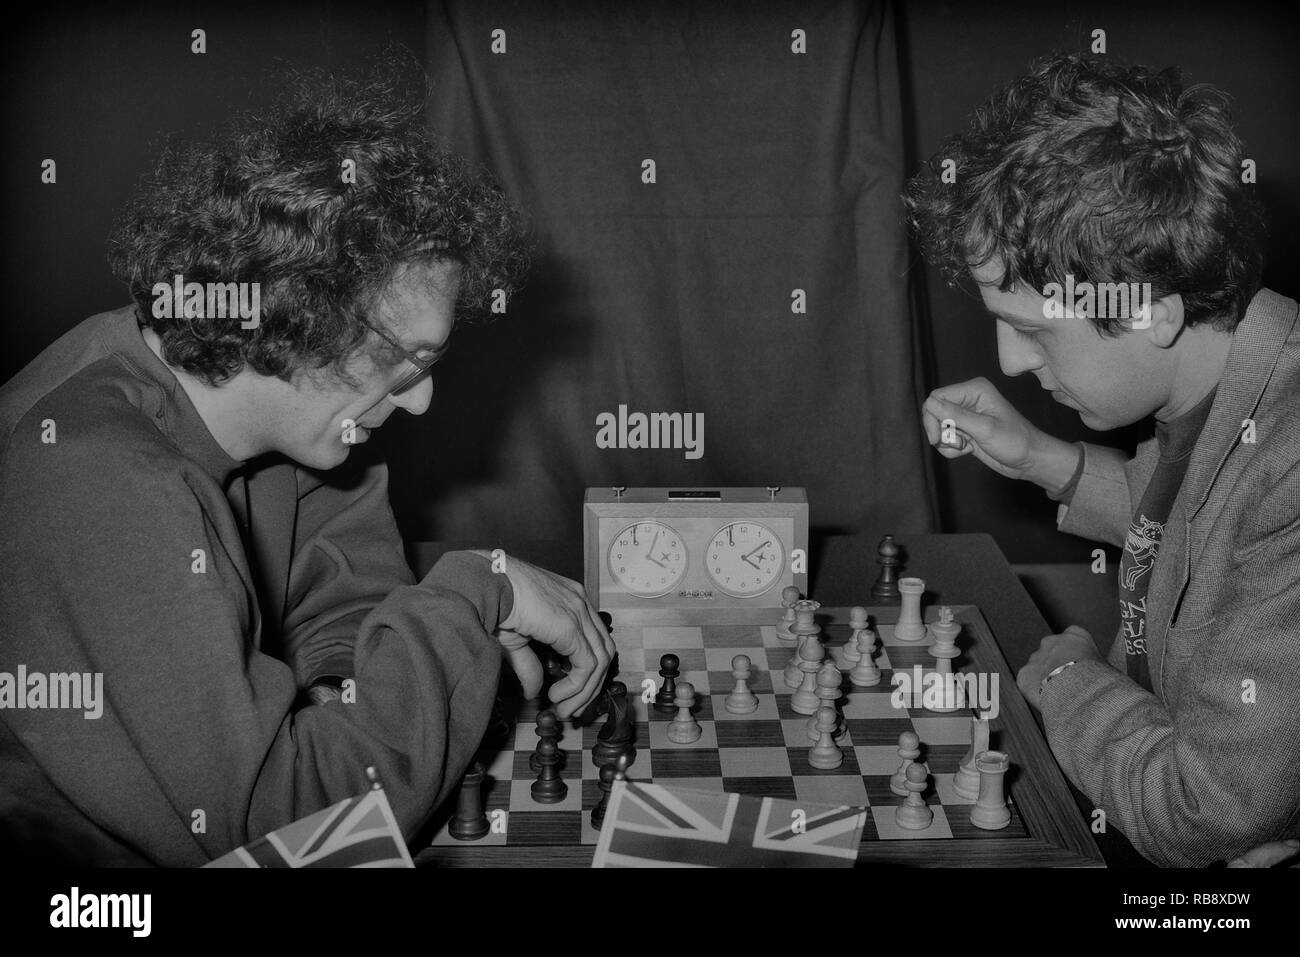 Hastings 66th Annual International Chess Congress. Premier tournament. 1990. Jonathon S Speelman (left) v Anthony C Kosten (right). England, UK Stock Photo